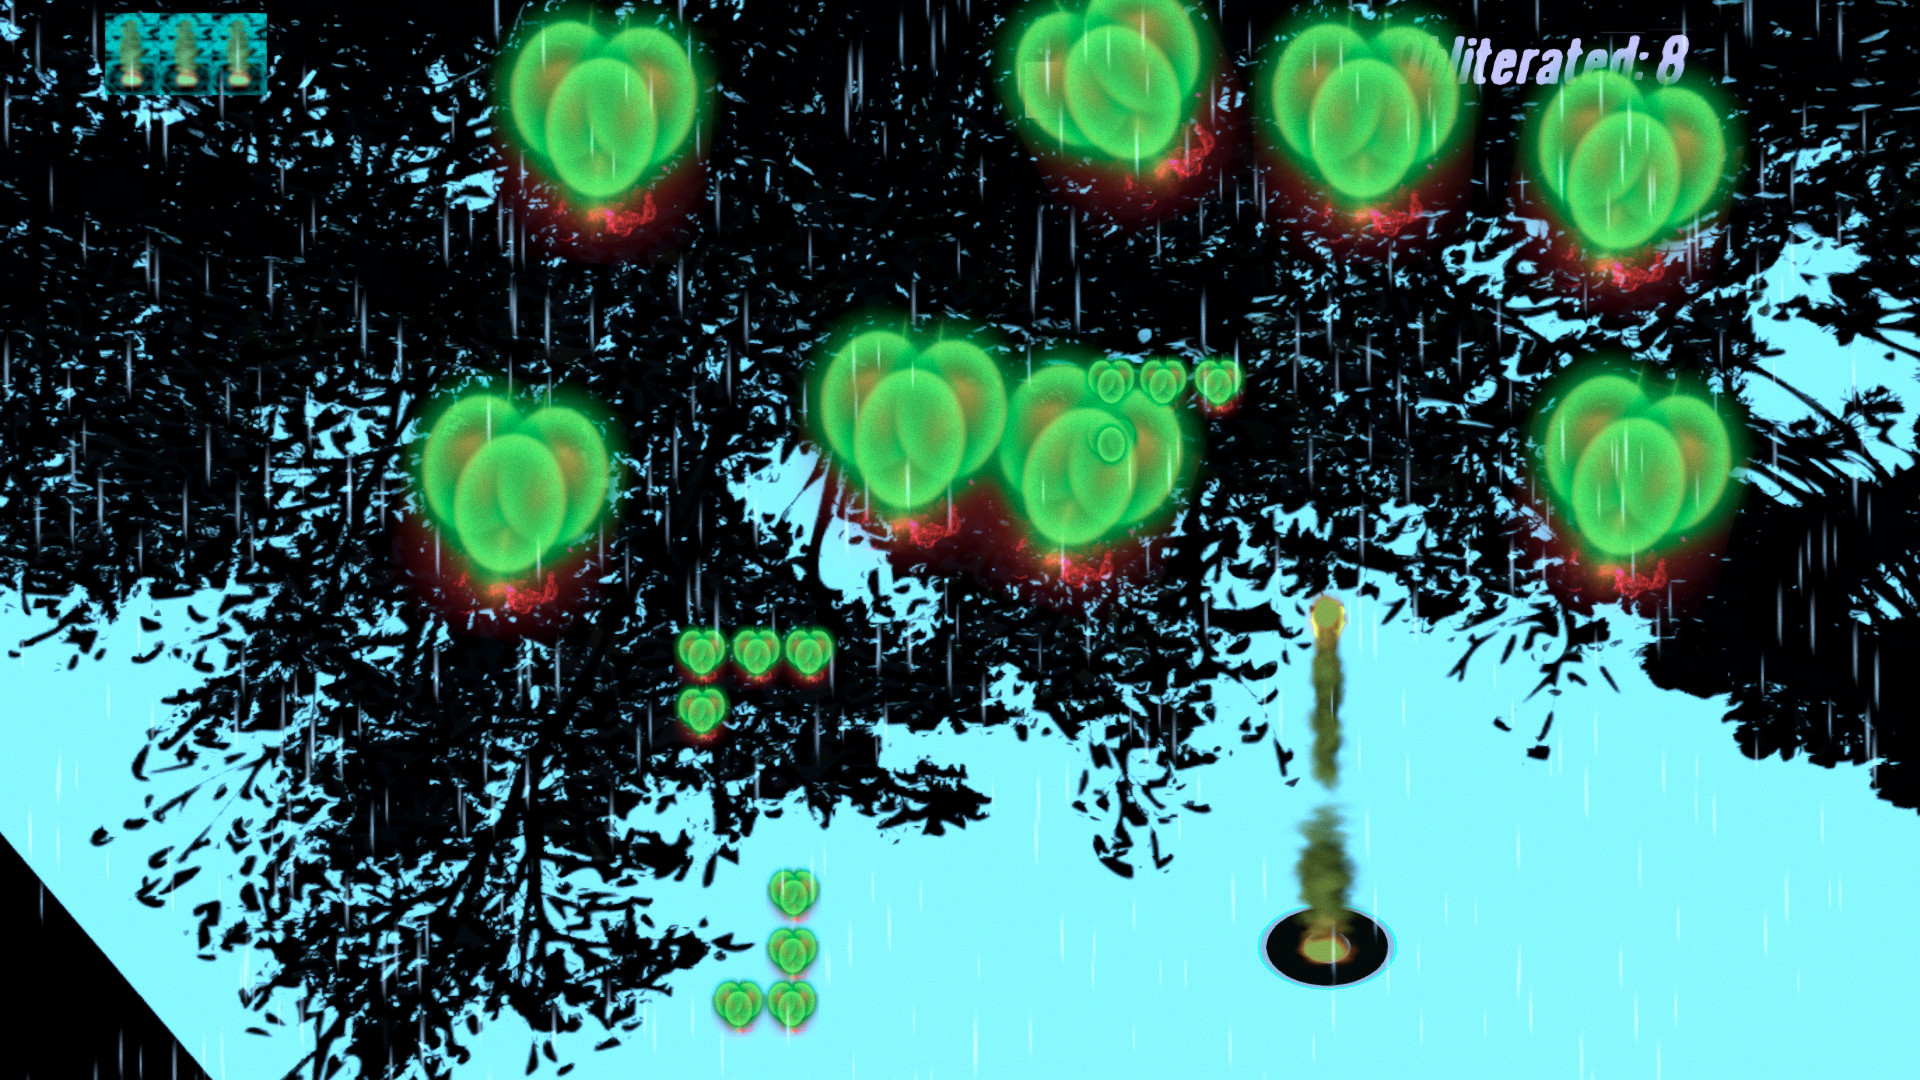 Spray Dynamite X Radioactive Insects screenshot